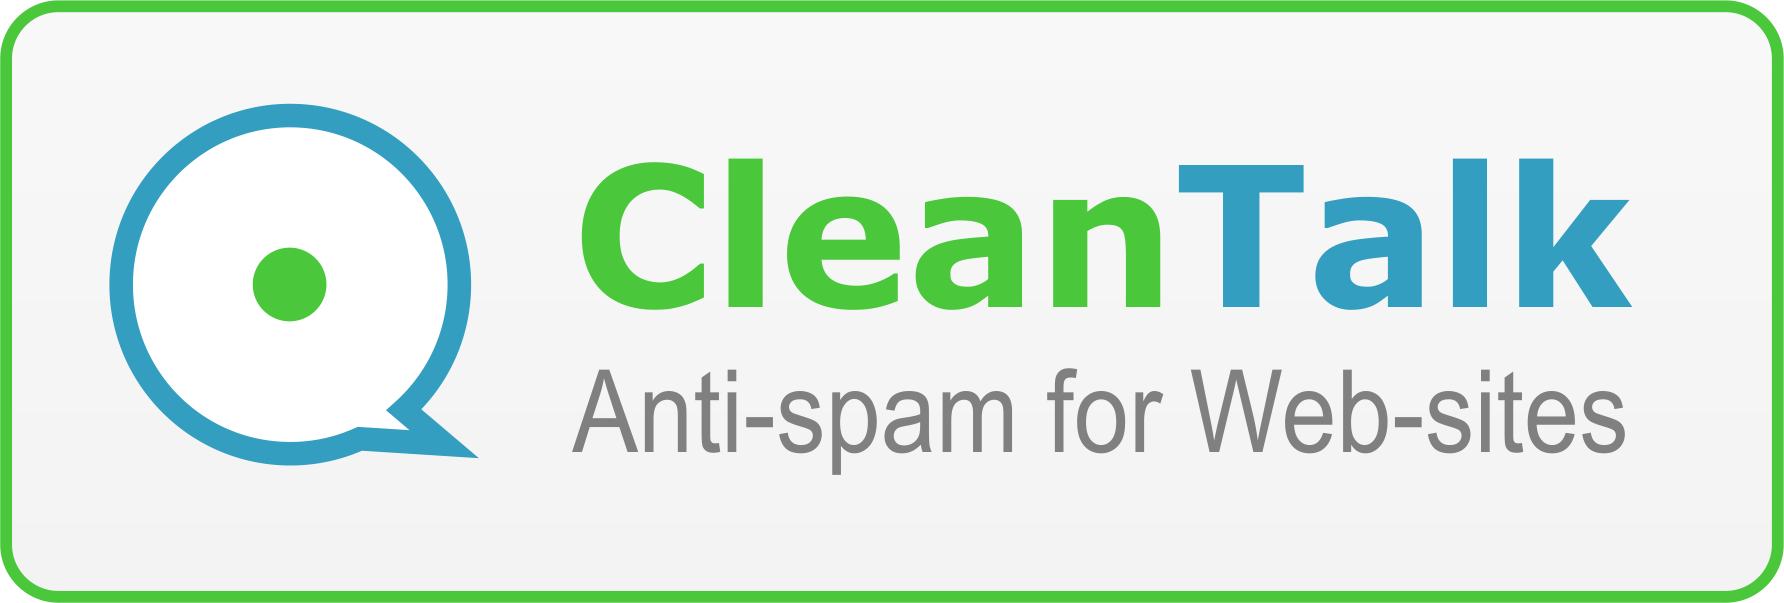 CleanTalk anti-spam logo